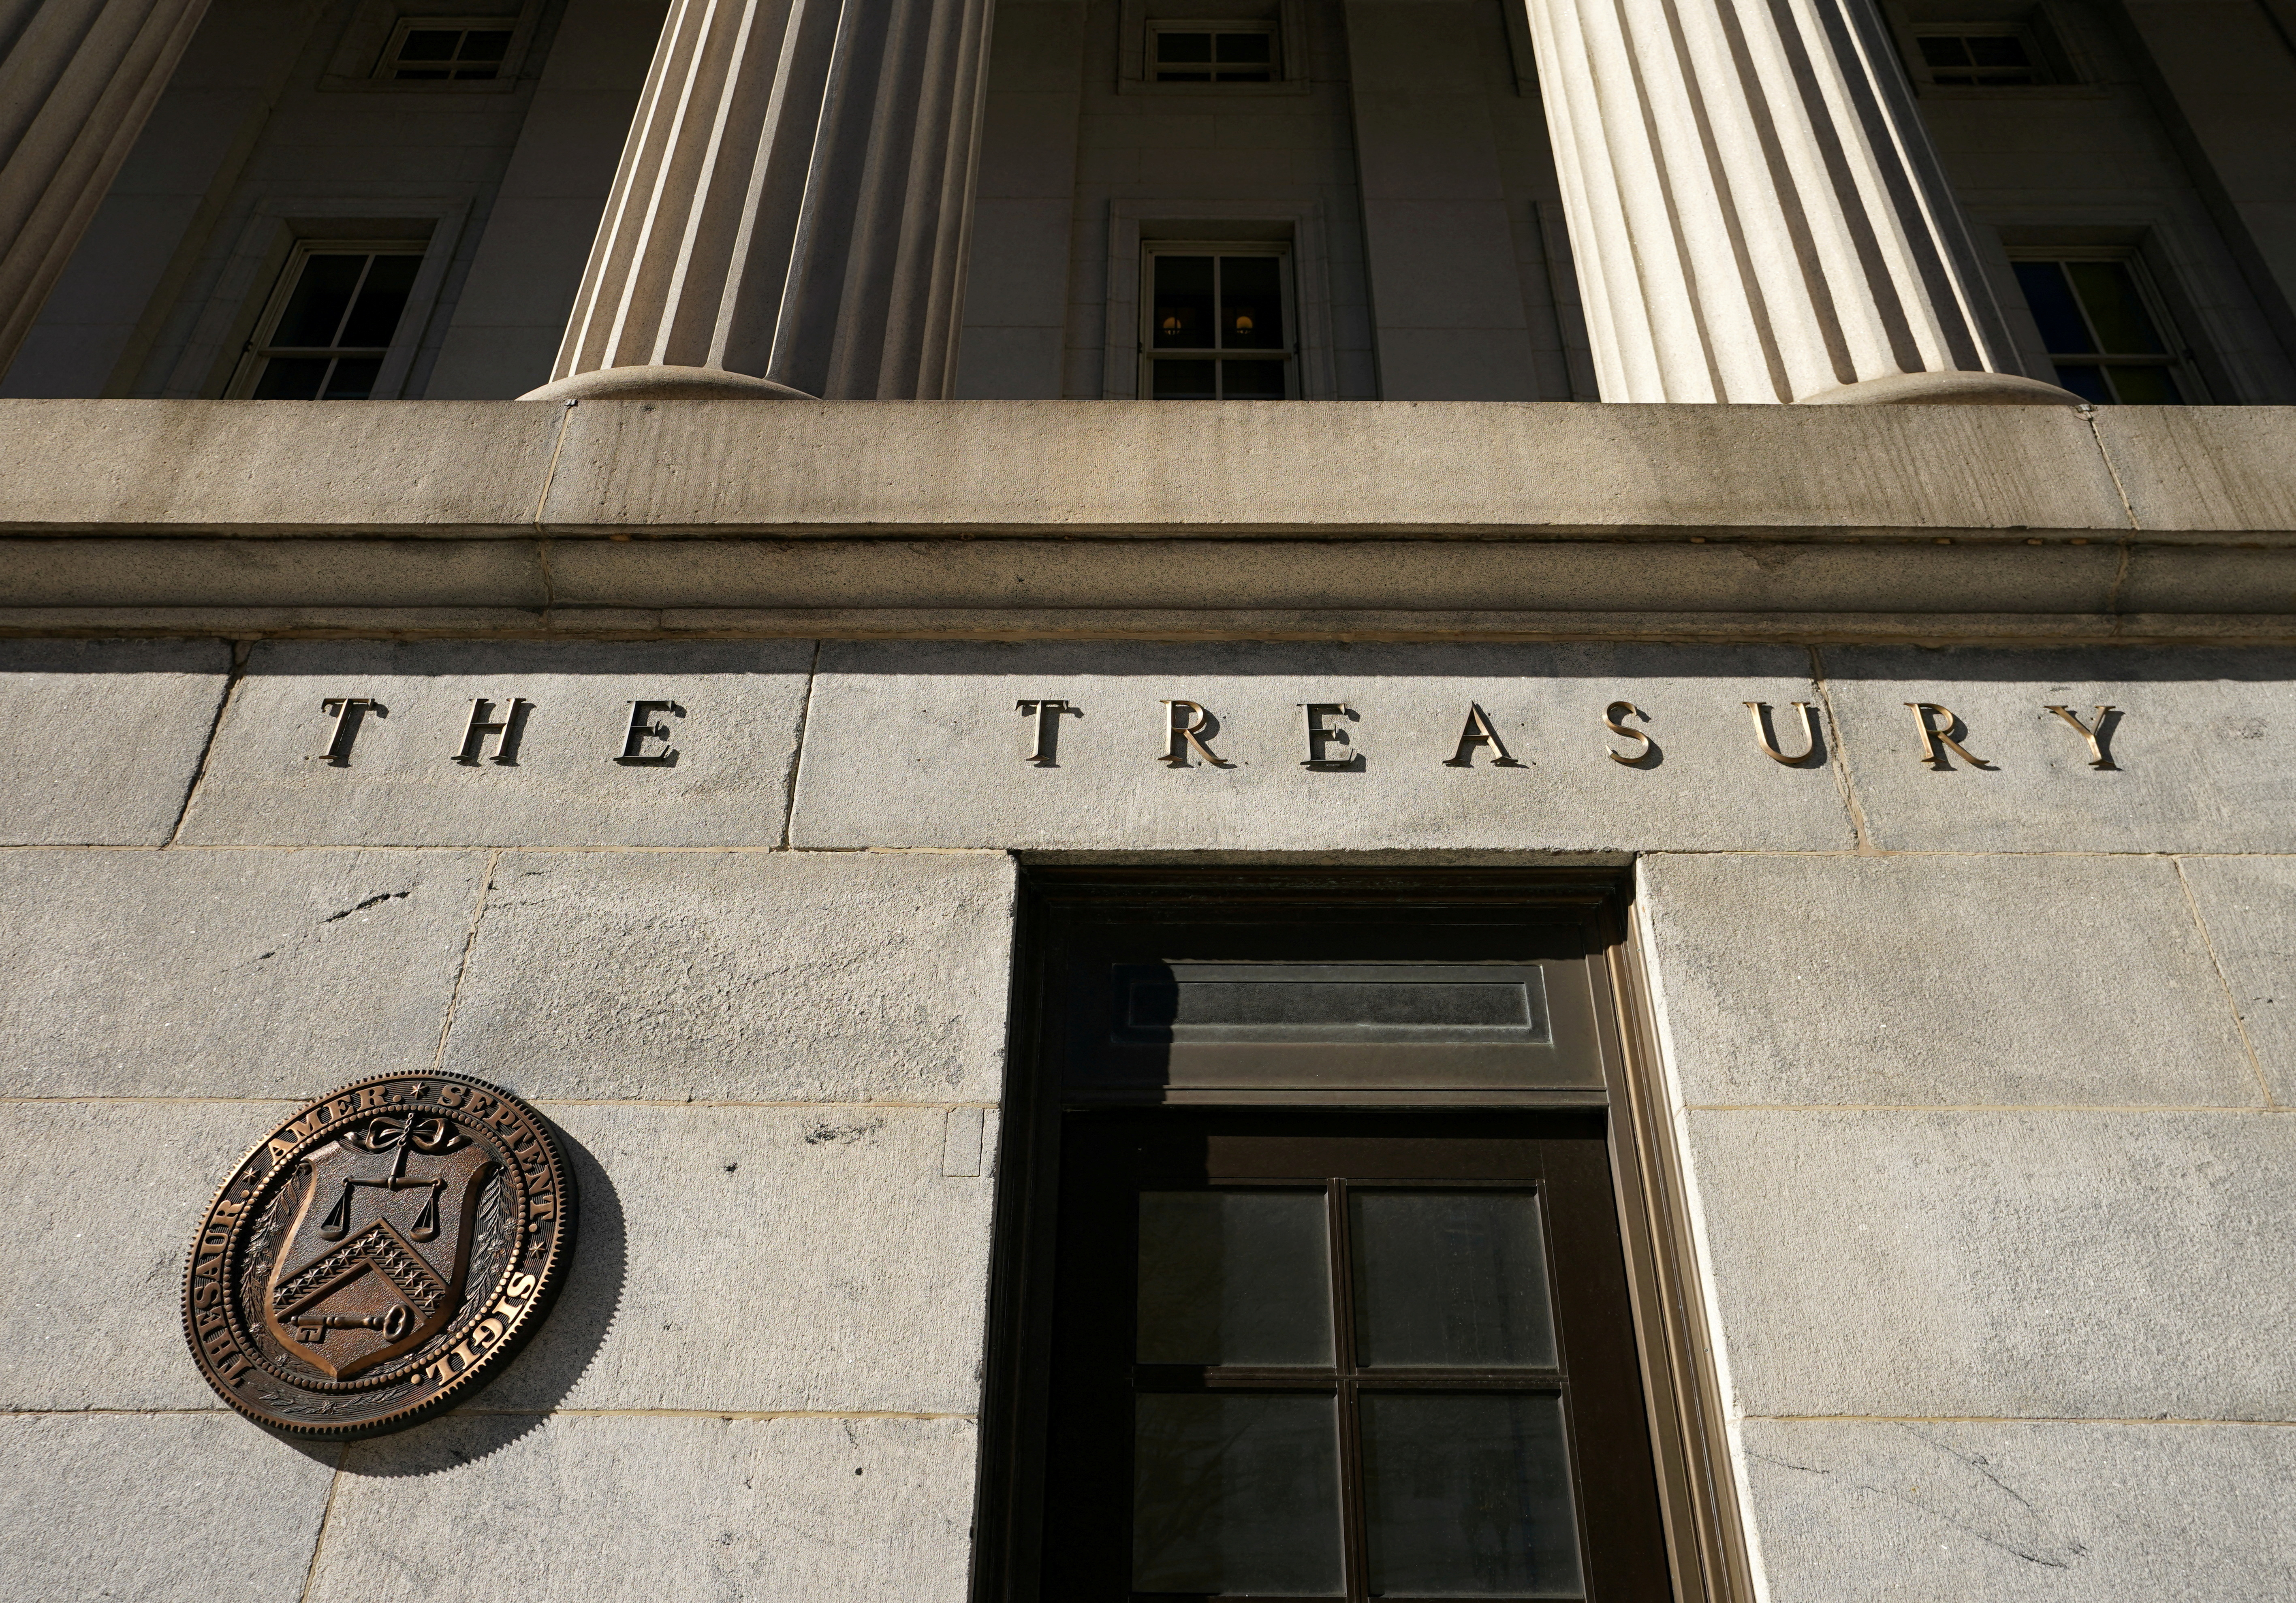 The U.S Treasury building in Washington